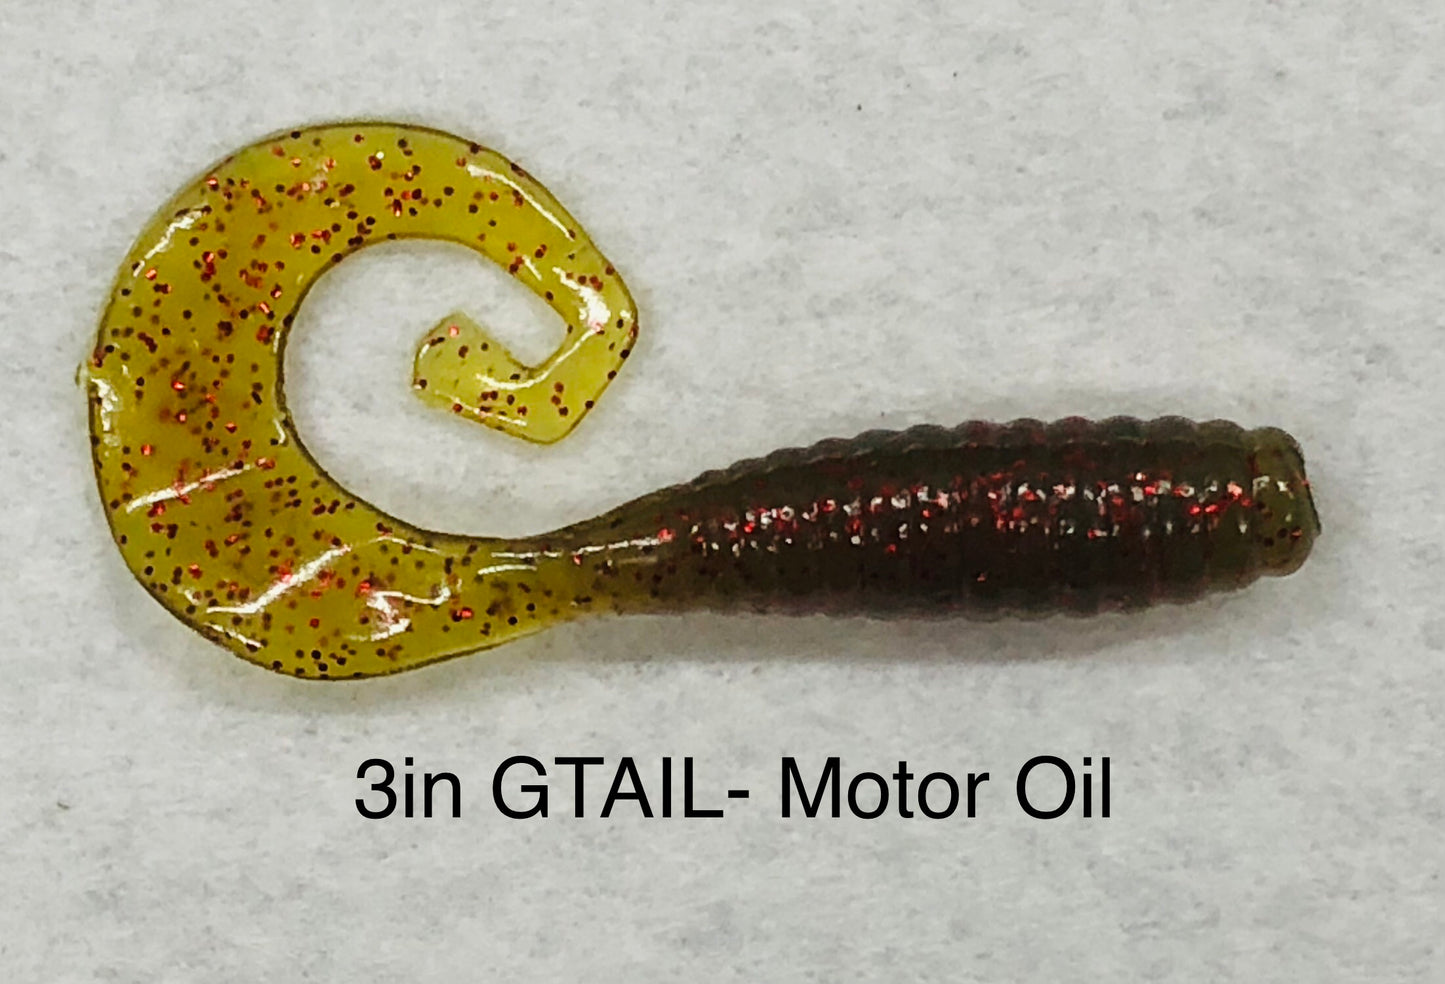 gitzit-g-tail-grub-motor oil-3in-19160